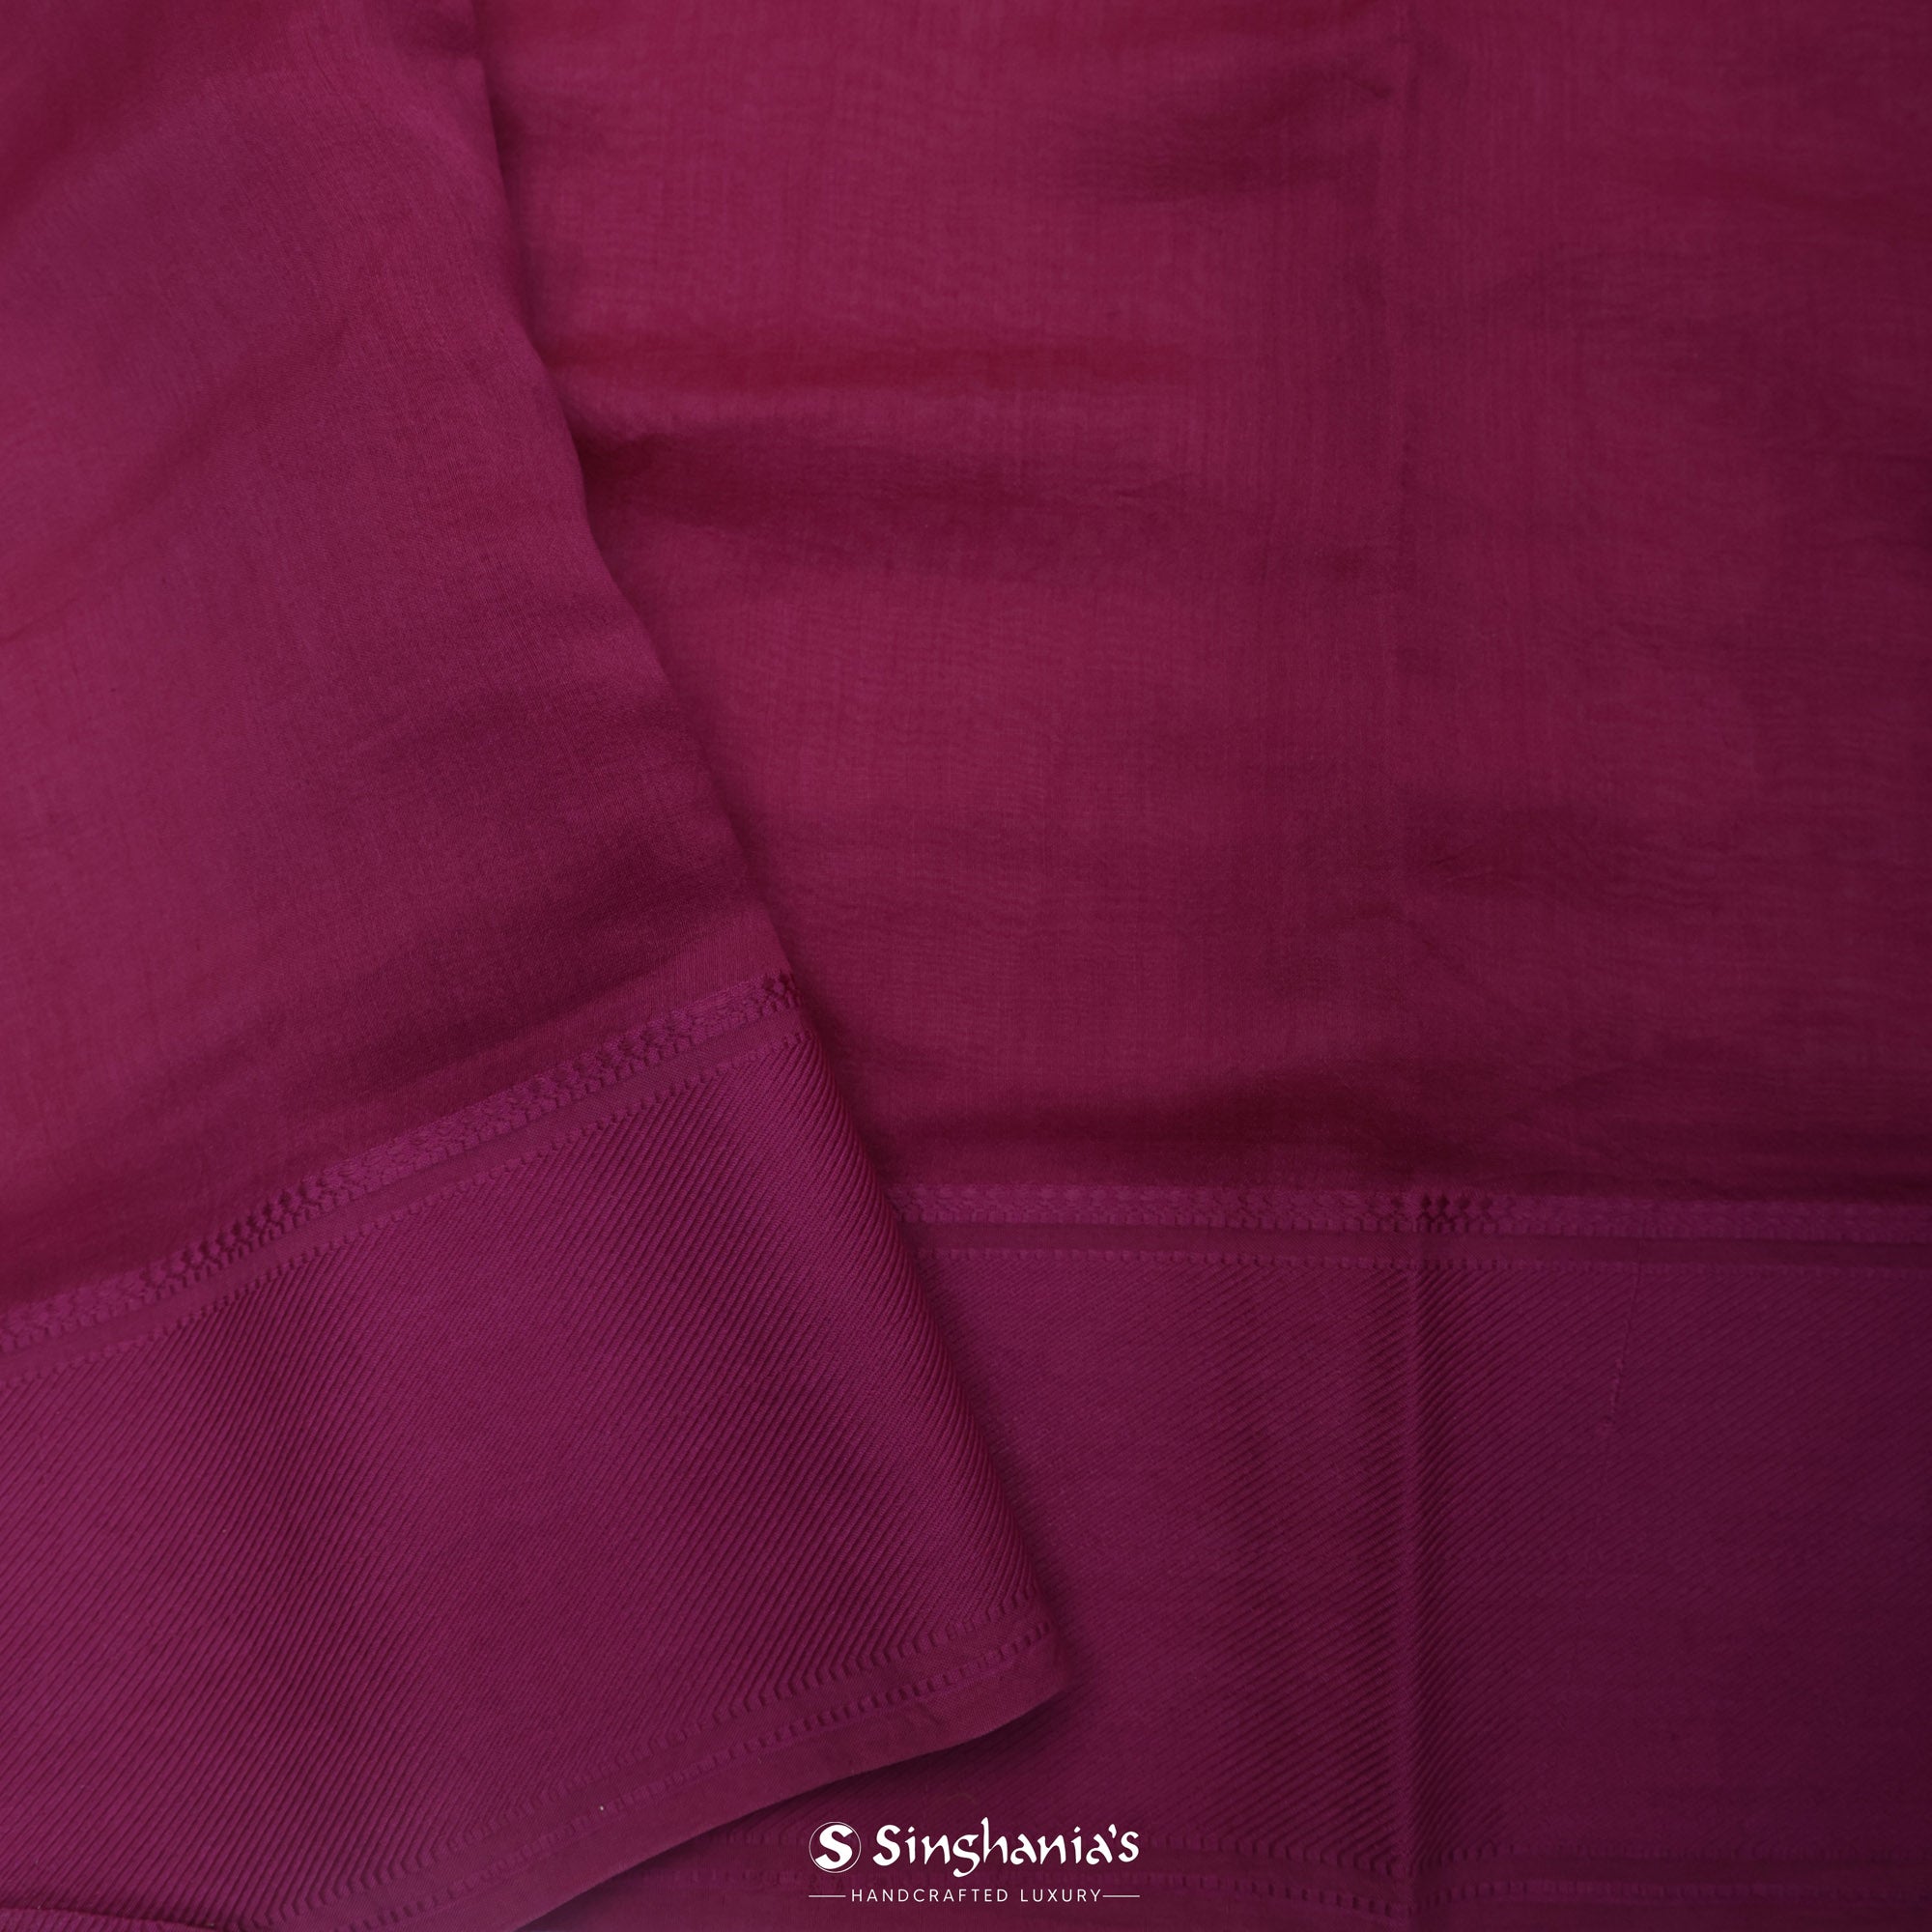 Cherry Pink Printed Chanderi Silk Saree With Floral Butti Design